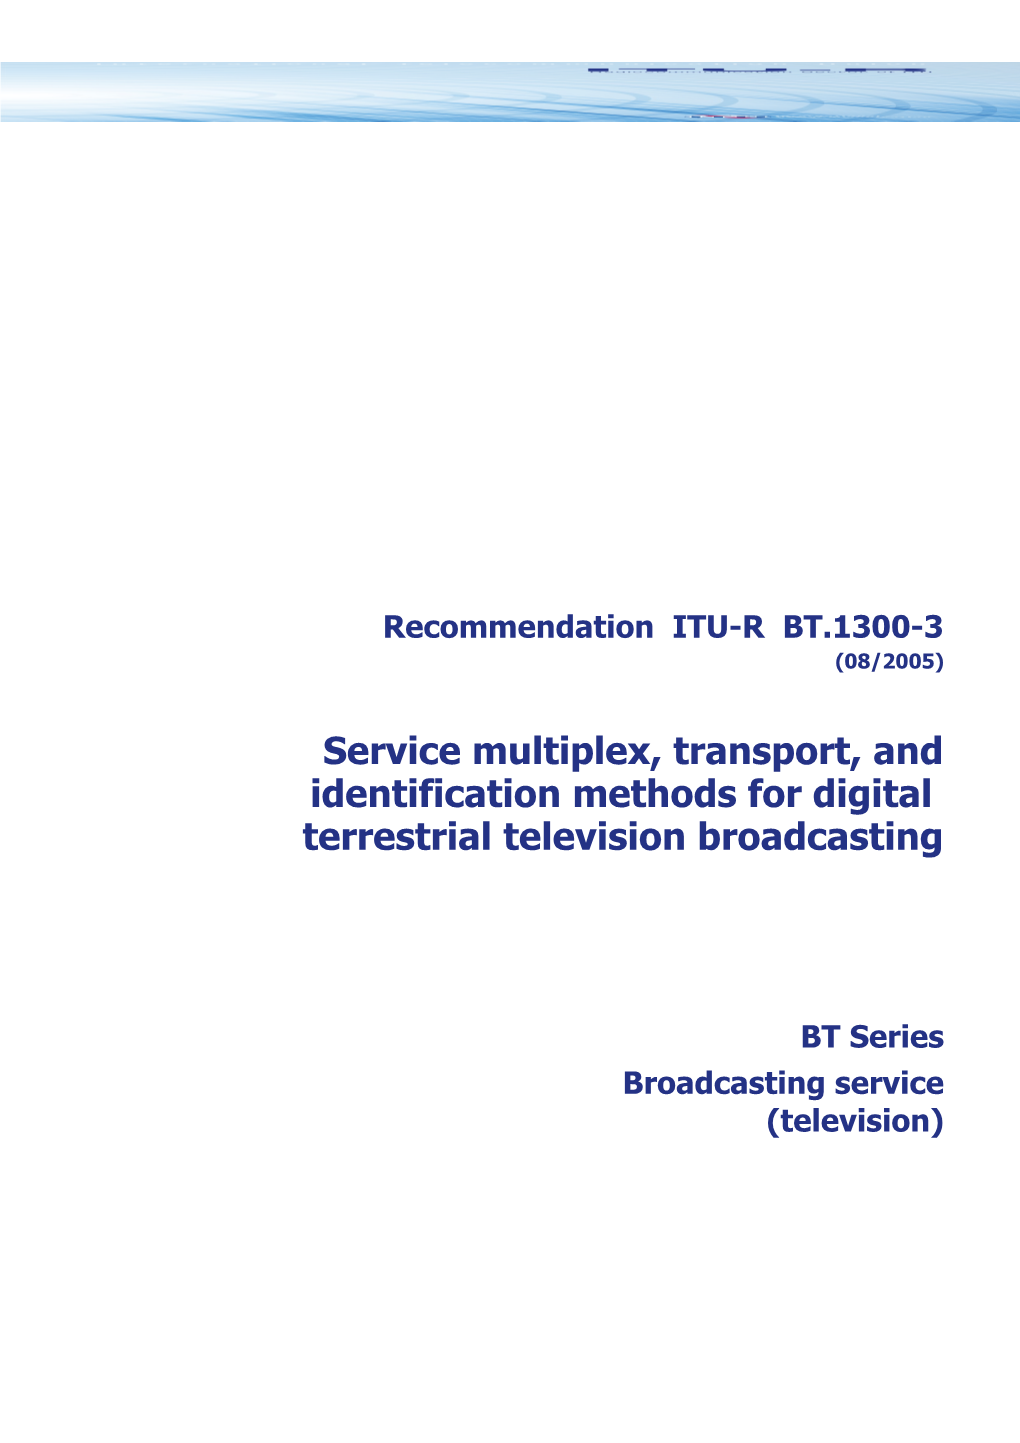 RECOMMENDATION ITU-R BT.1300-3 - Service Multiplex, Transport, and Identification Methods